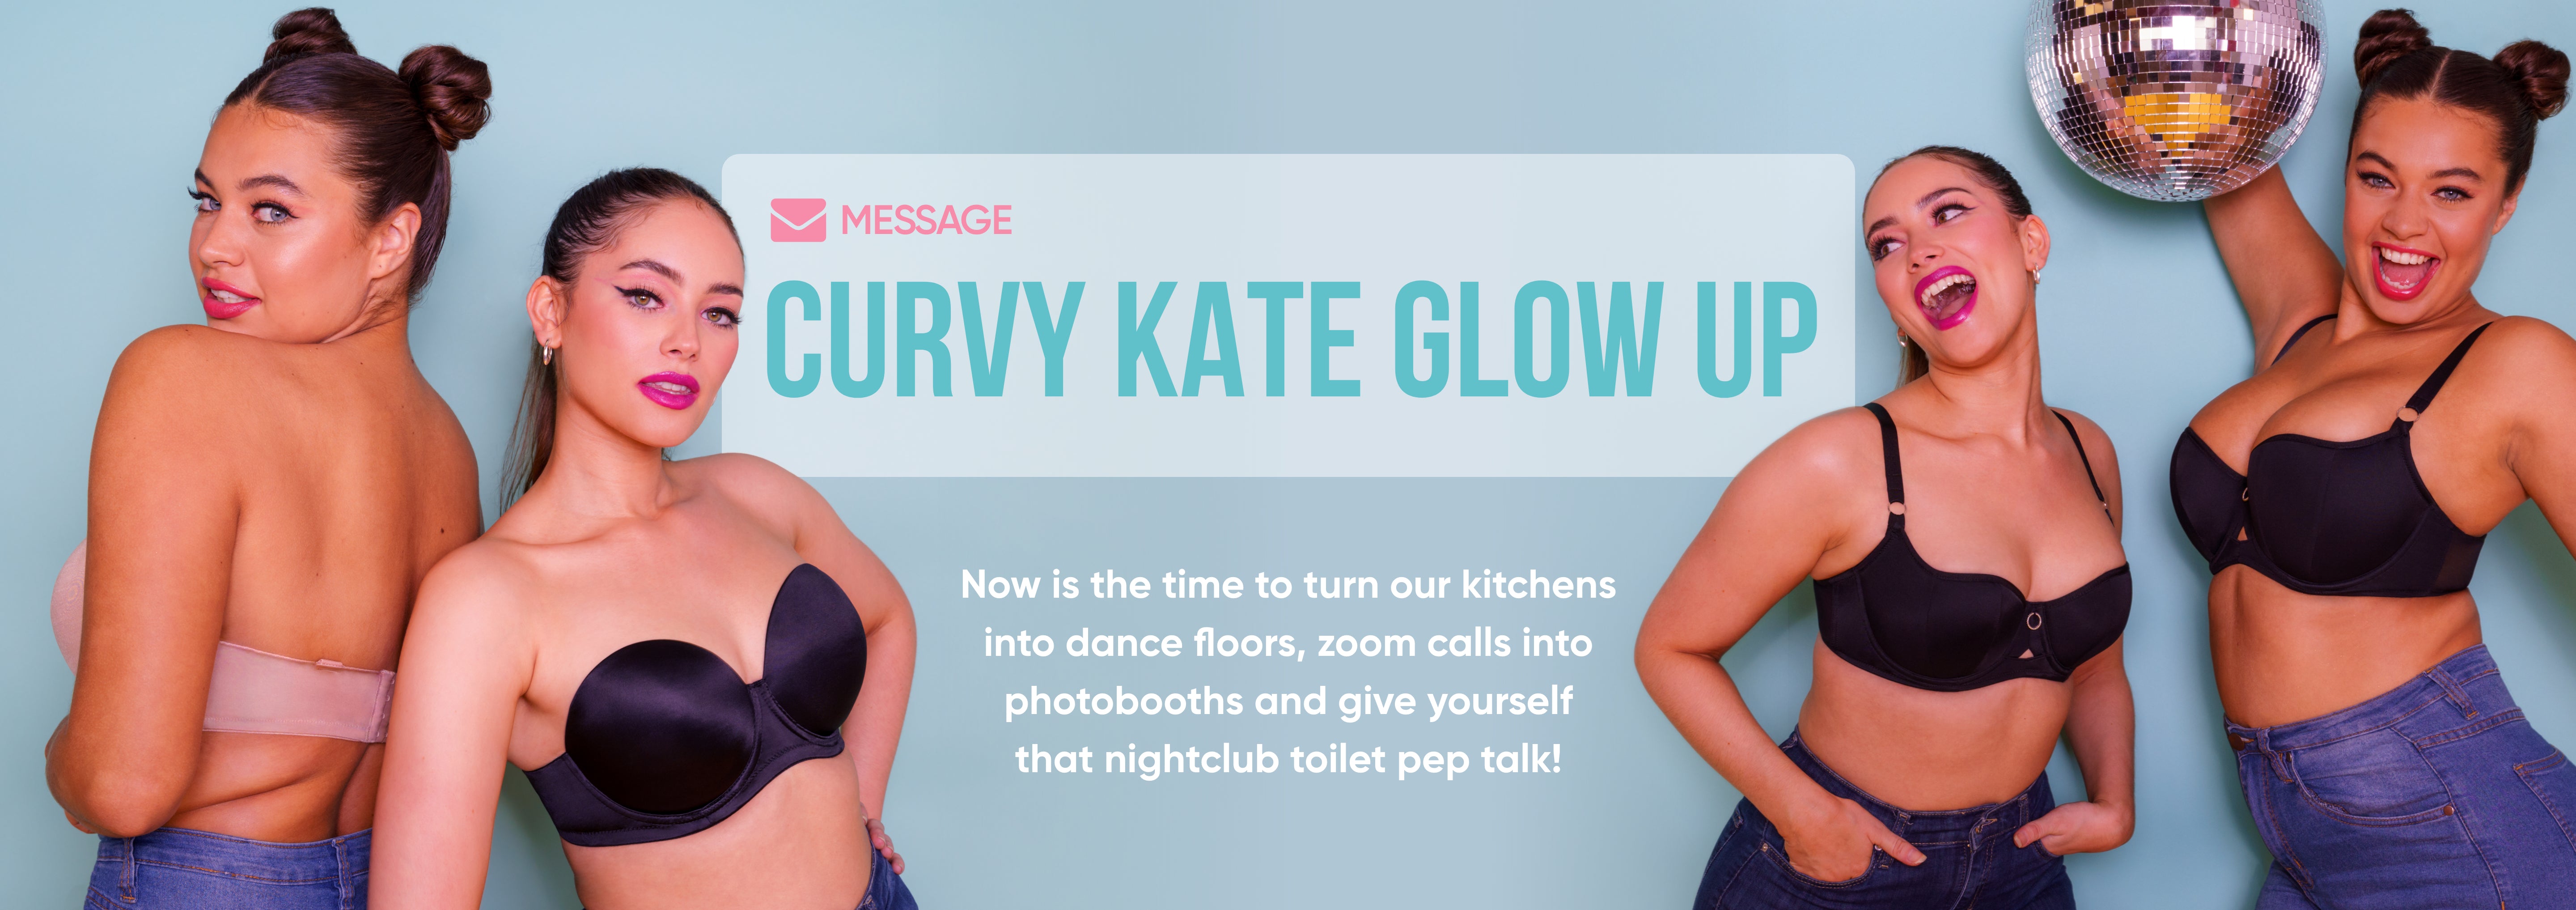 Curvy Kate Glow Up